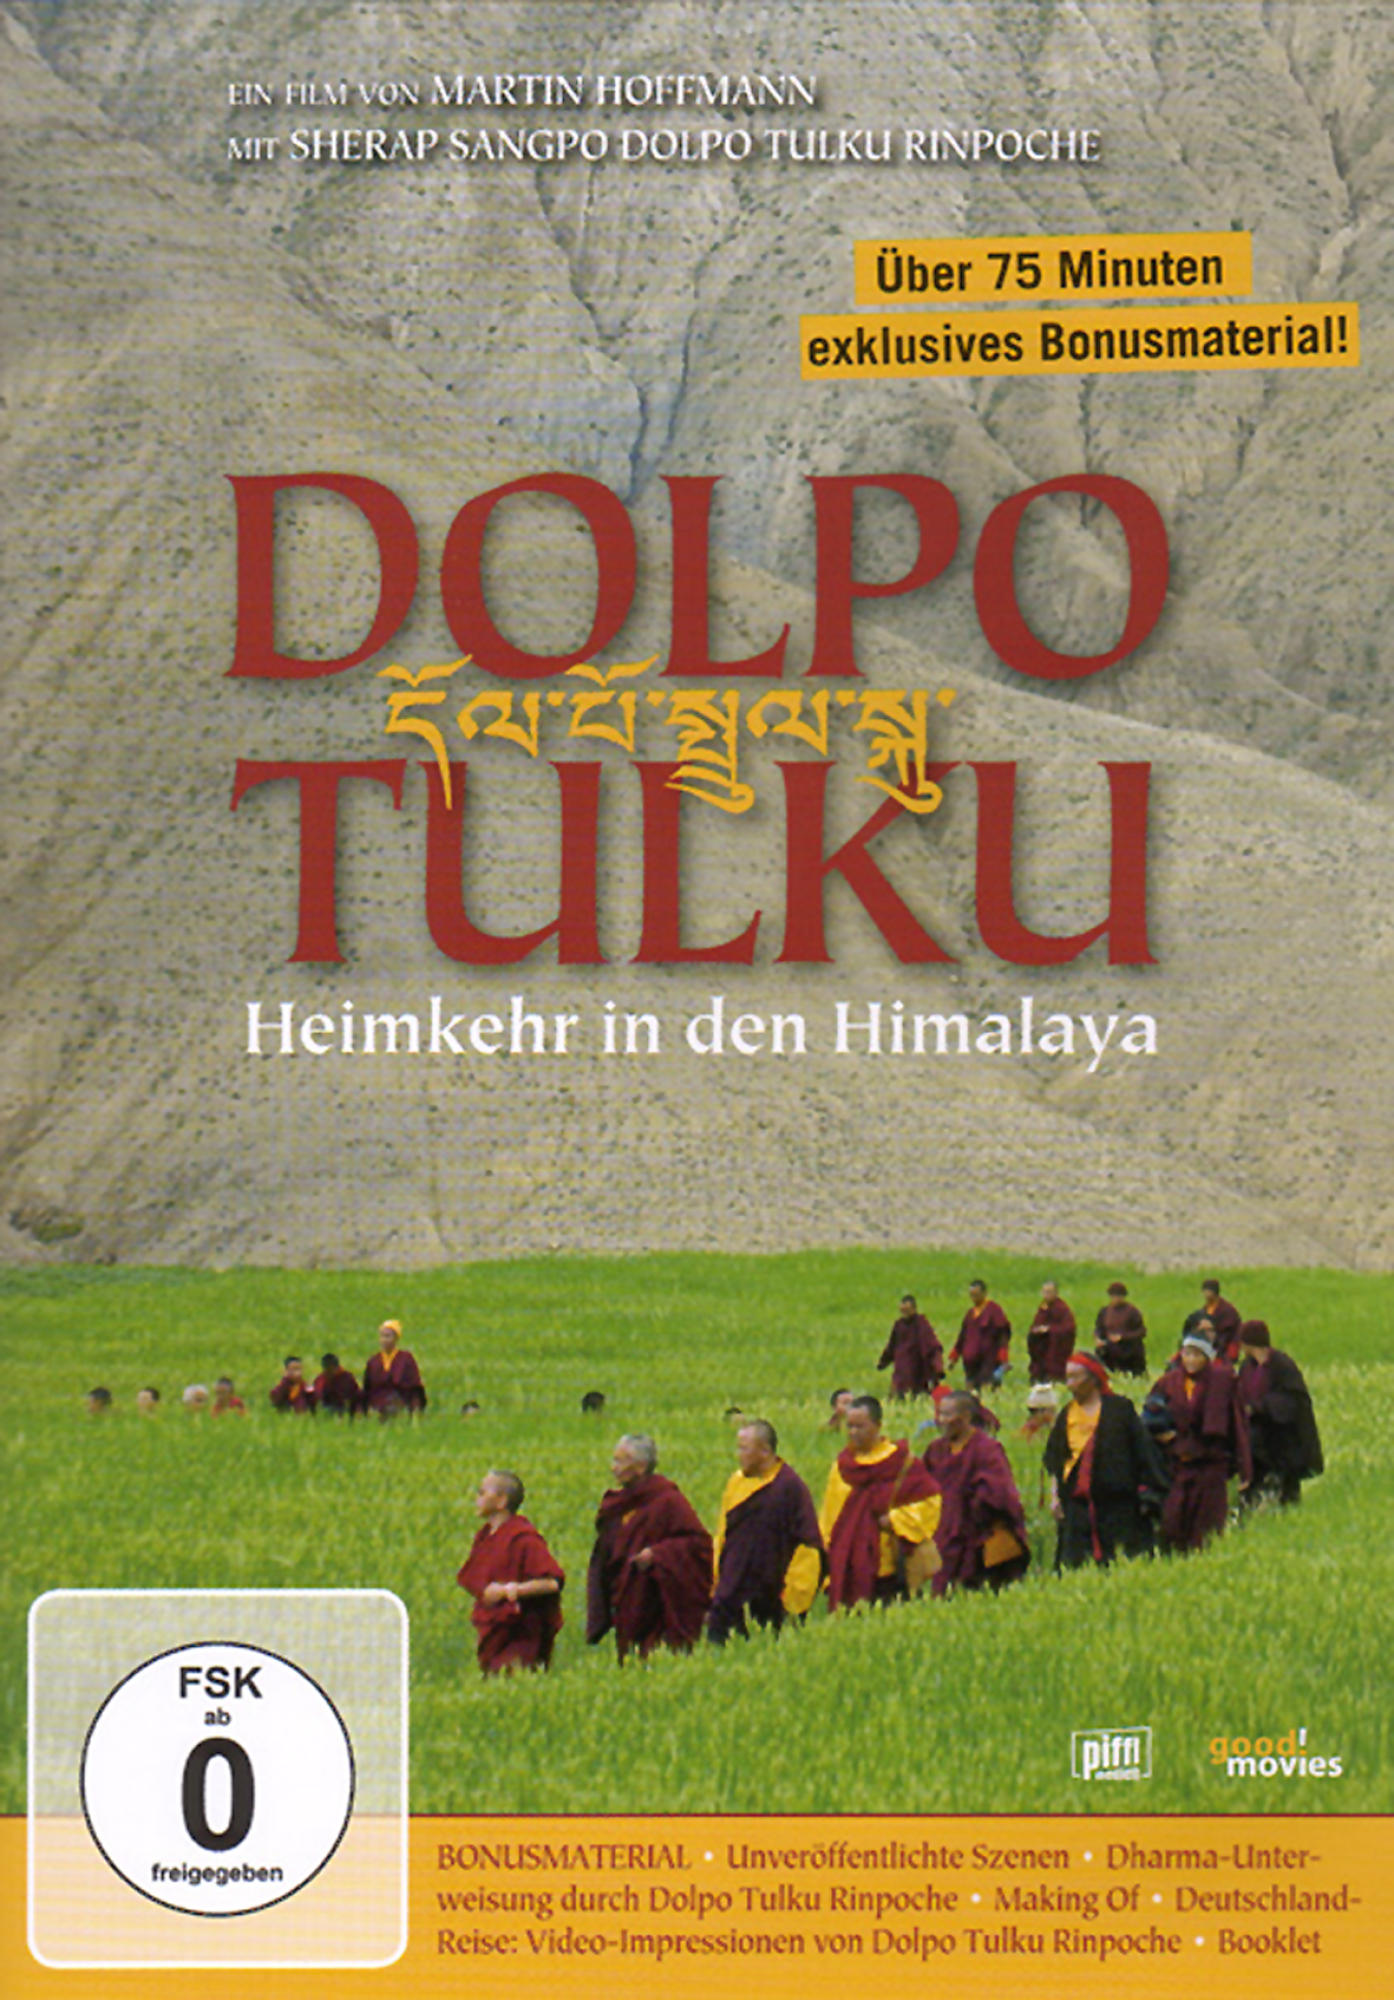 Dolpo Tulku - Heimkehr Himalaya in den DVD